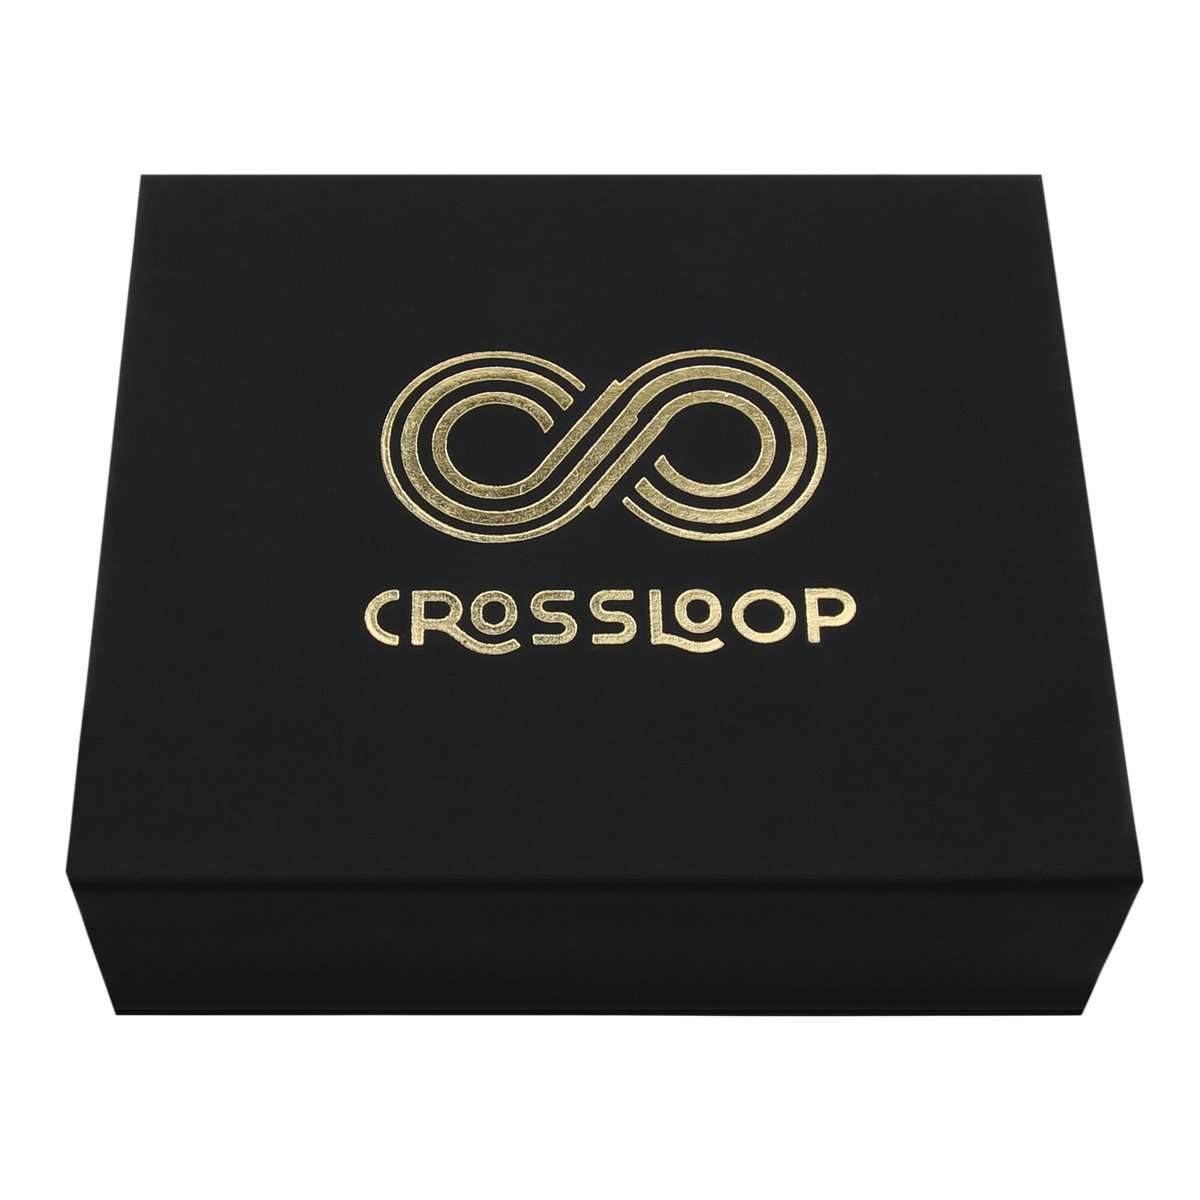 Crossloop fast charging data cable box